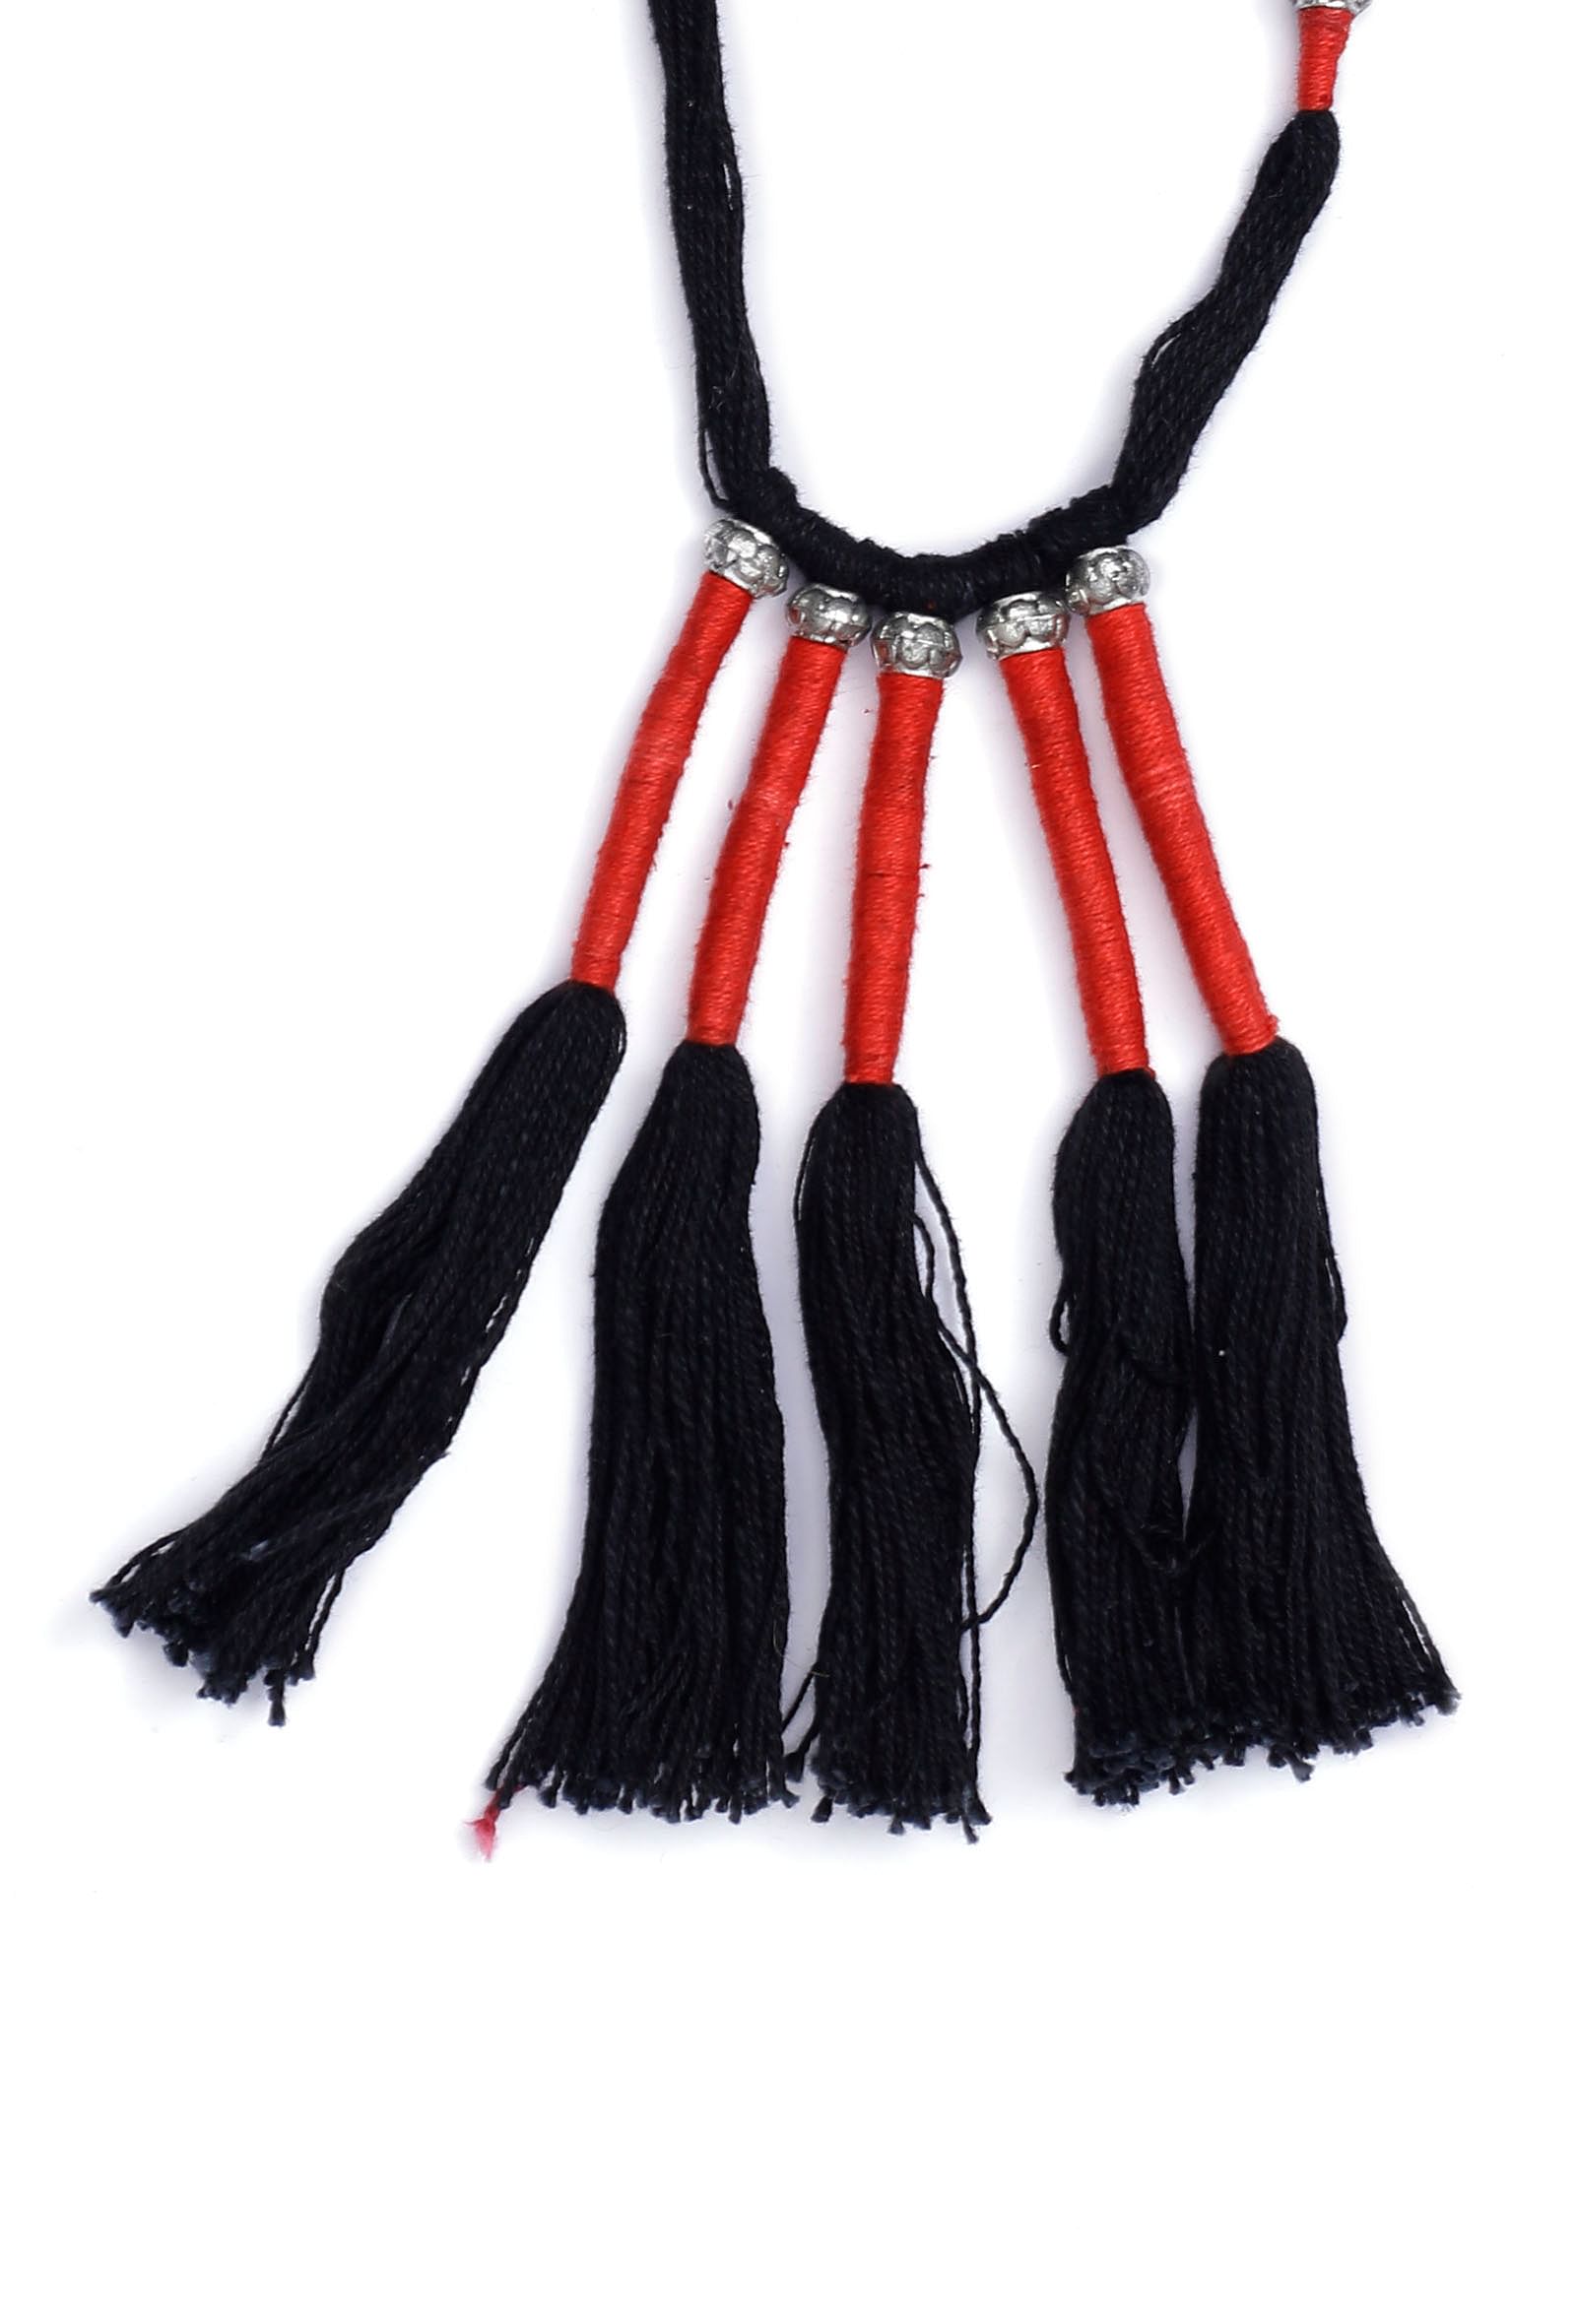 Lishika Red and Black Tassels Tribal Necklace